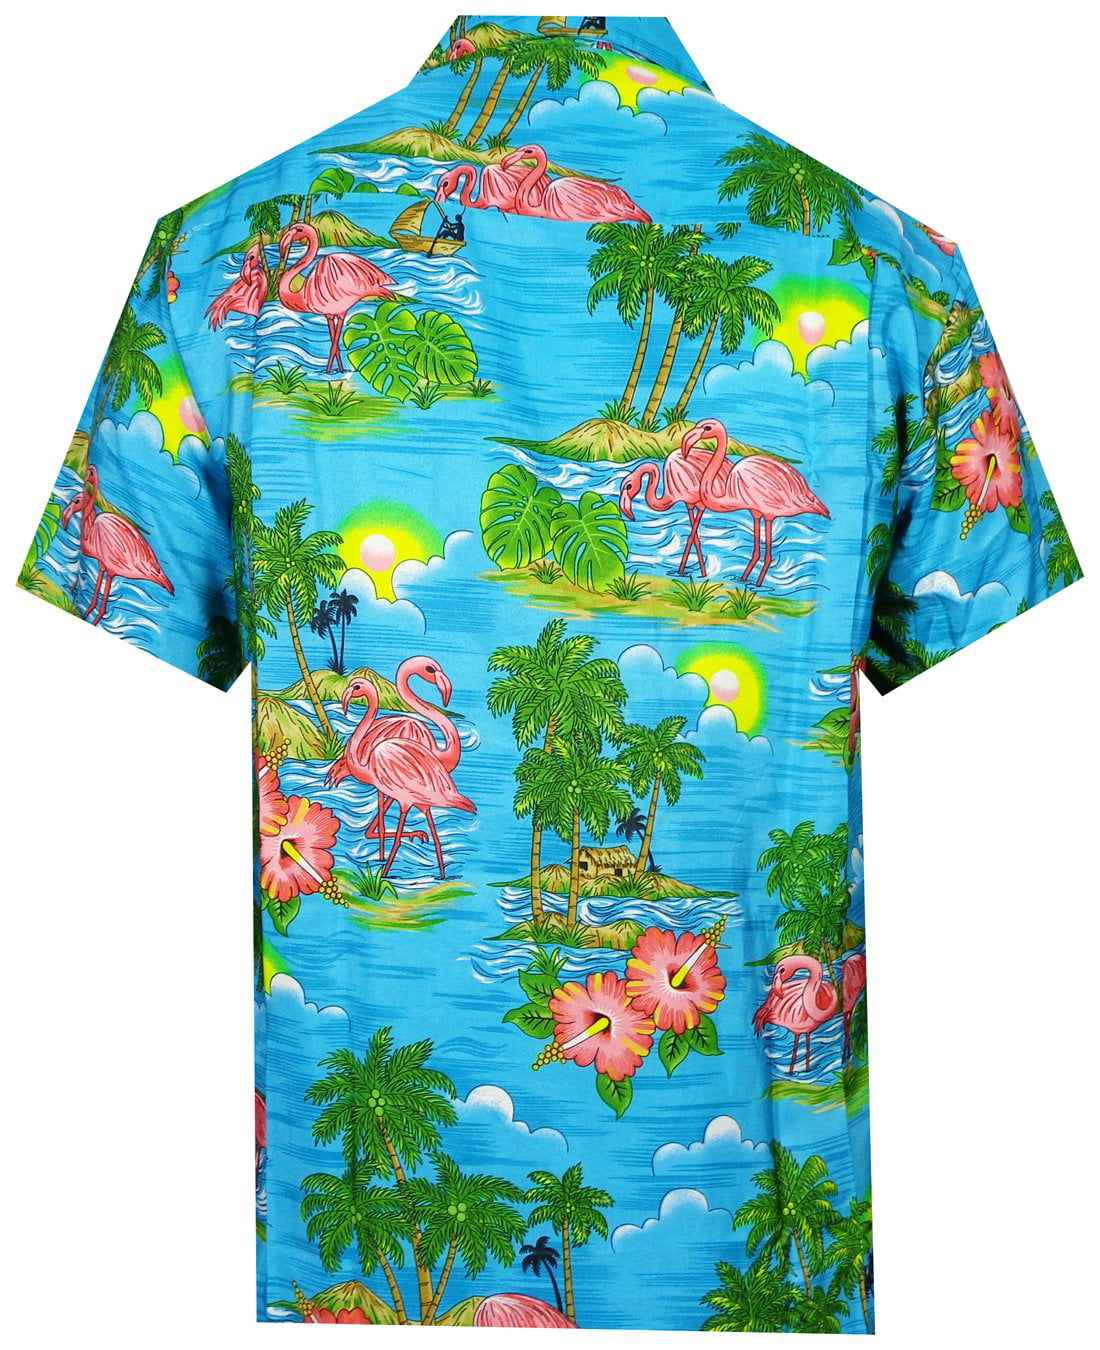 Hawaiian Shirt Clip Art - Clipartion.com Clipart Library Clipart ...